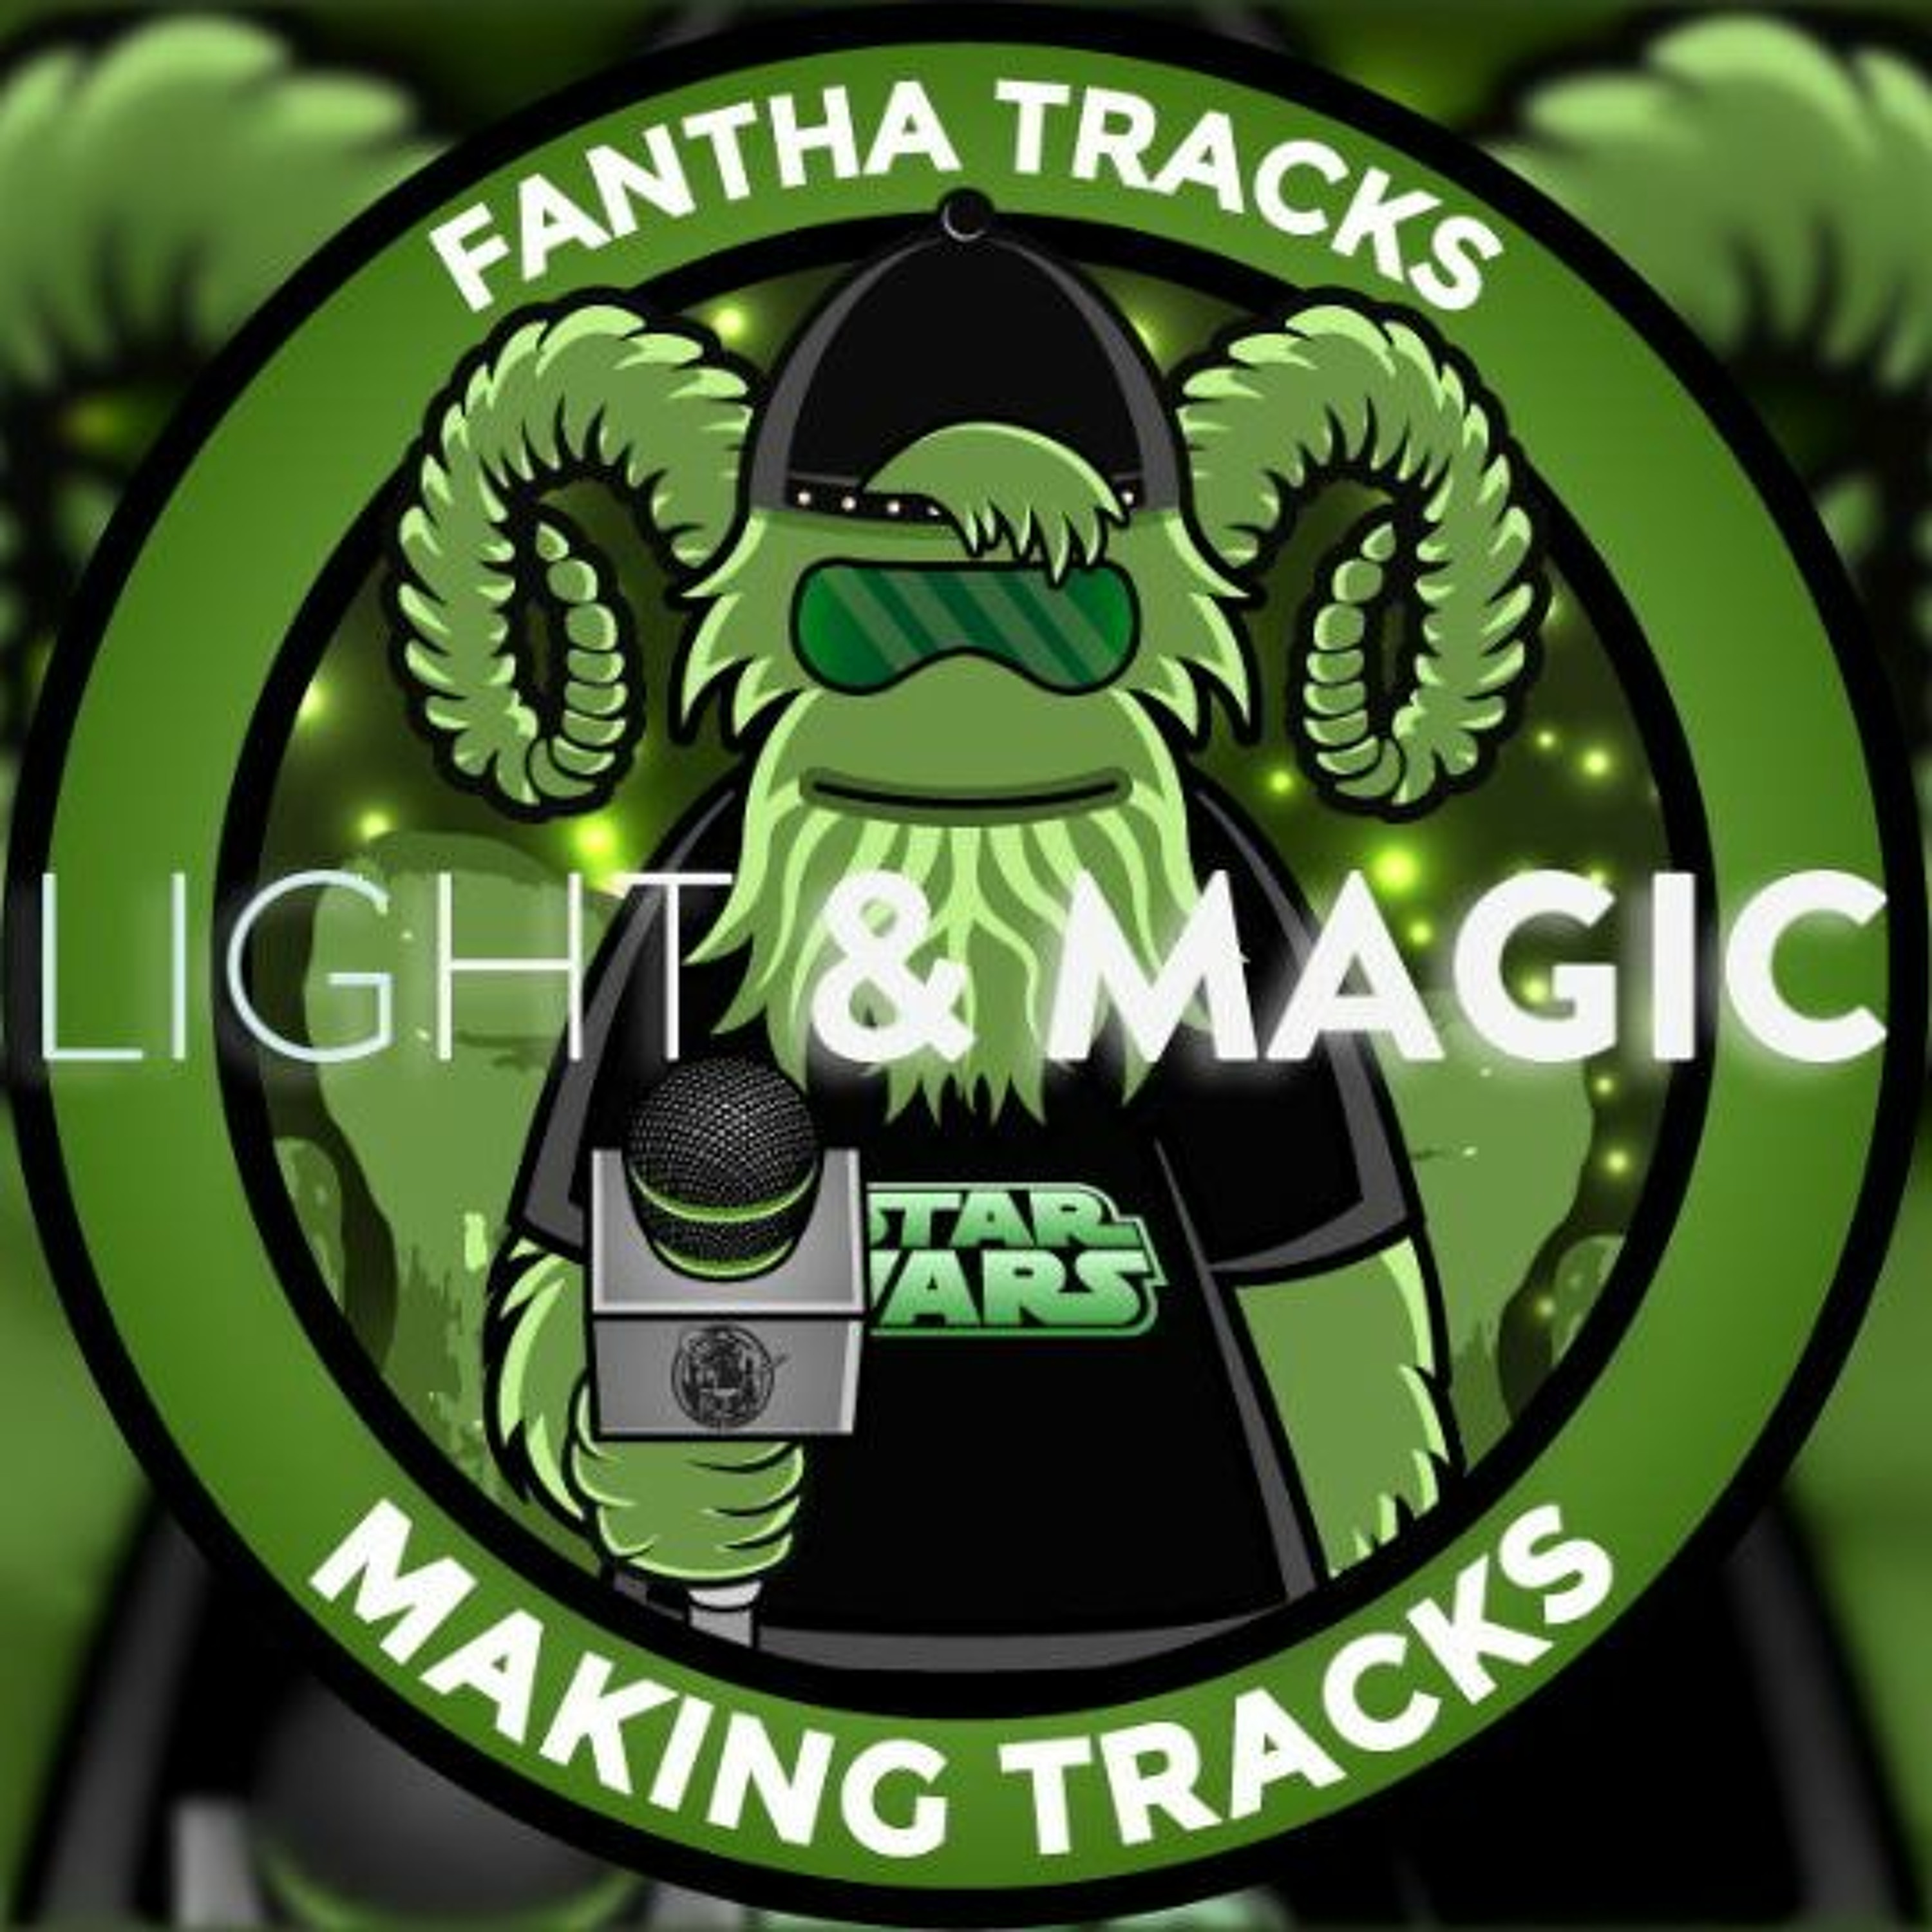 Making Tracks: Celebrating Light & Magic